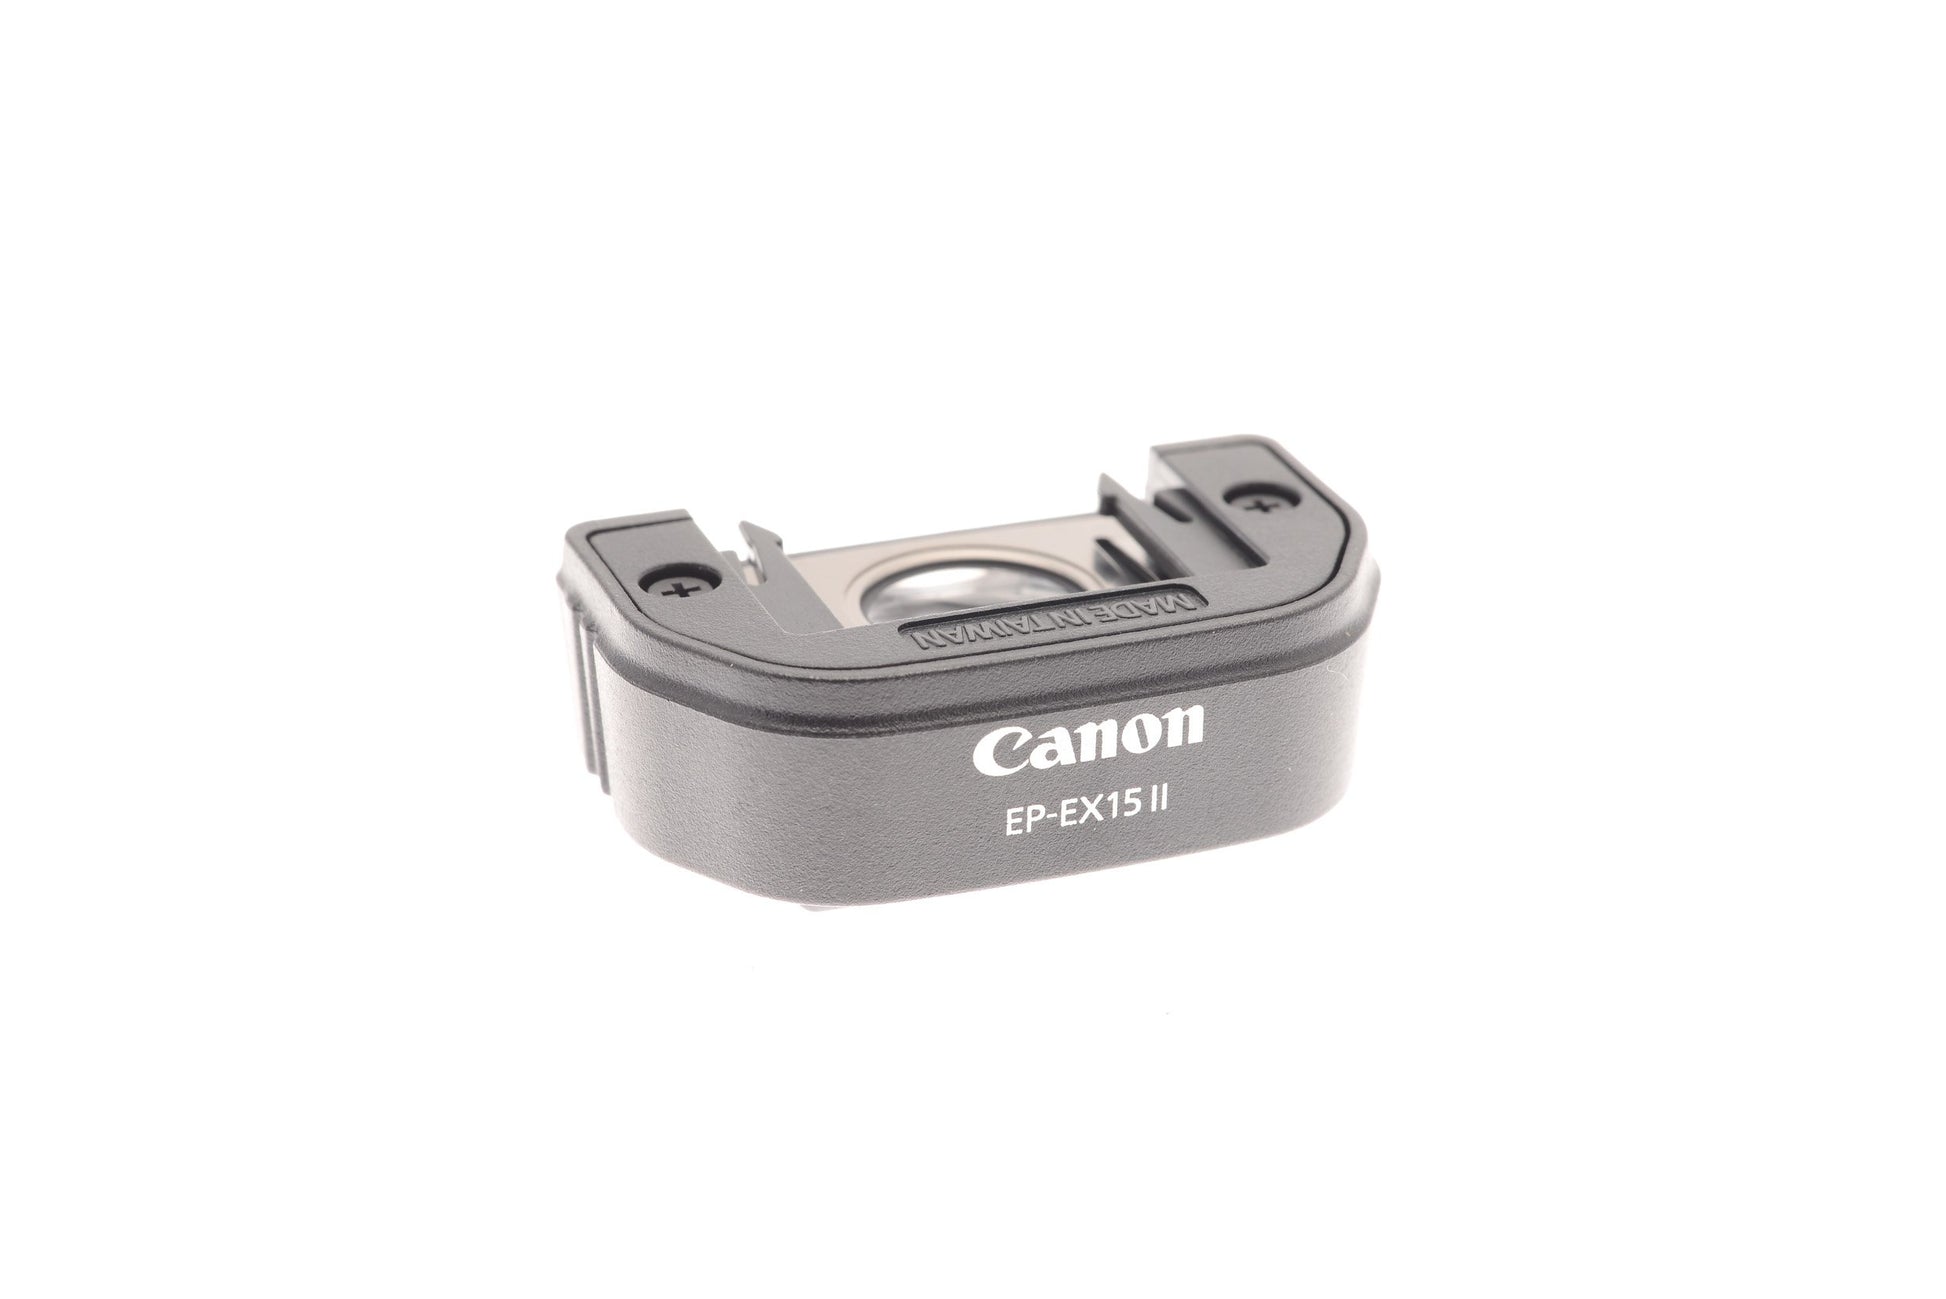 Canon EP-EX15II Eyepiece Extender - Accessory